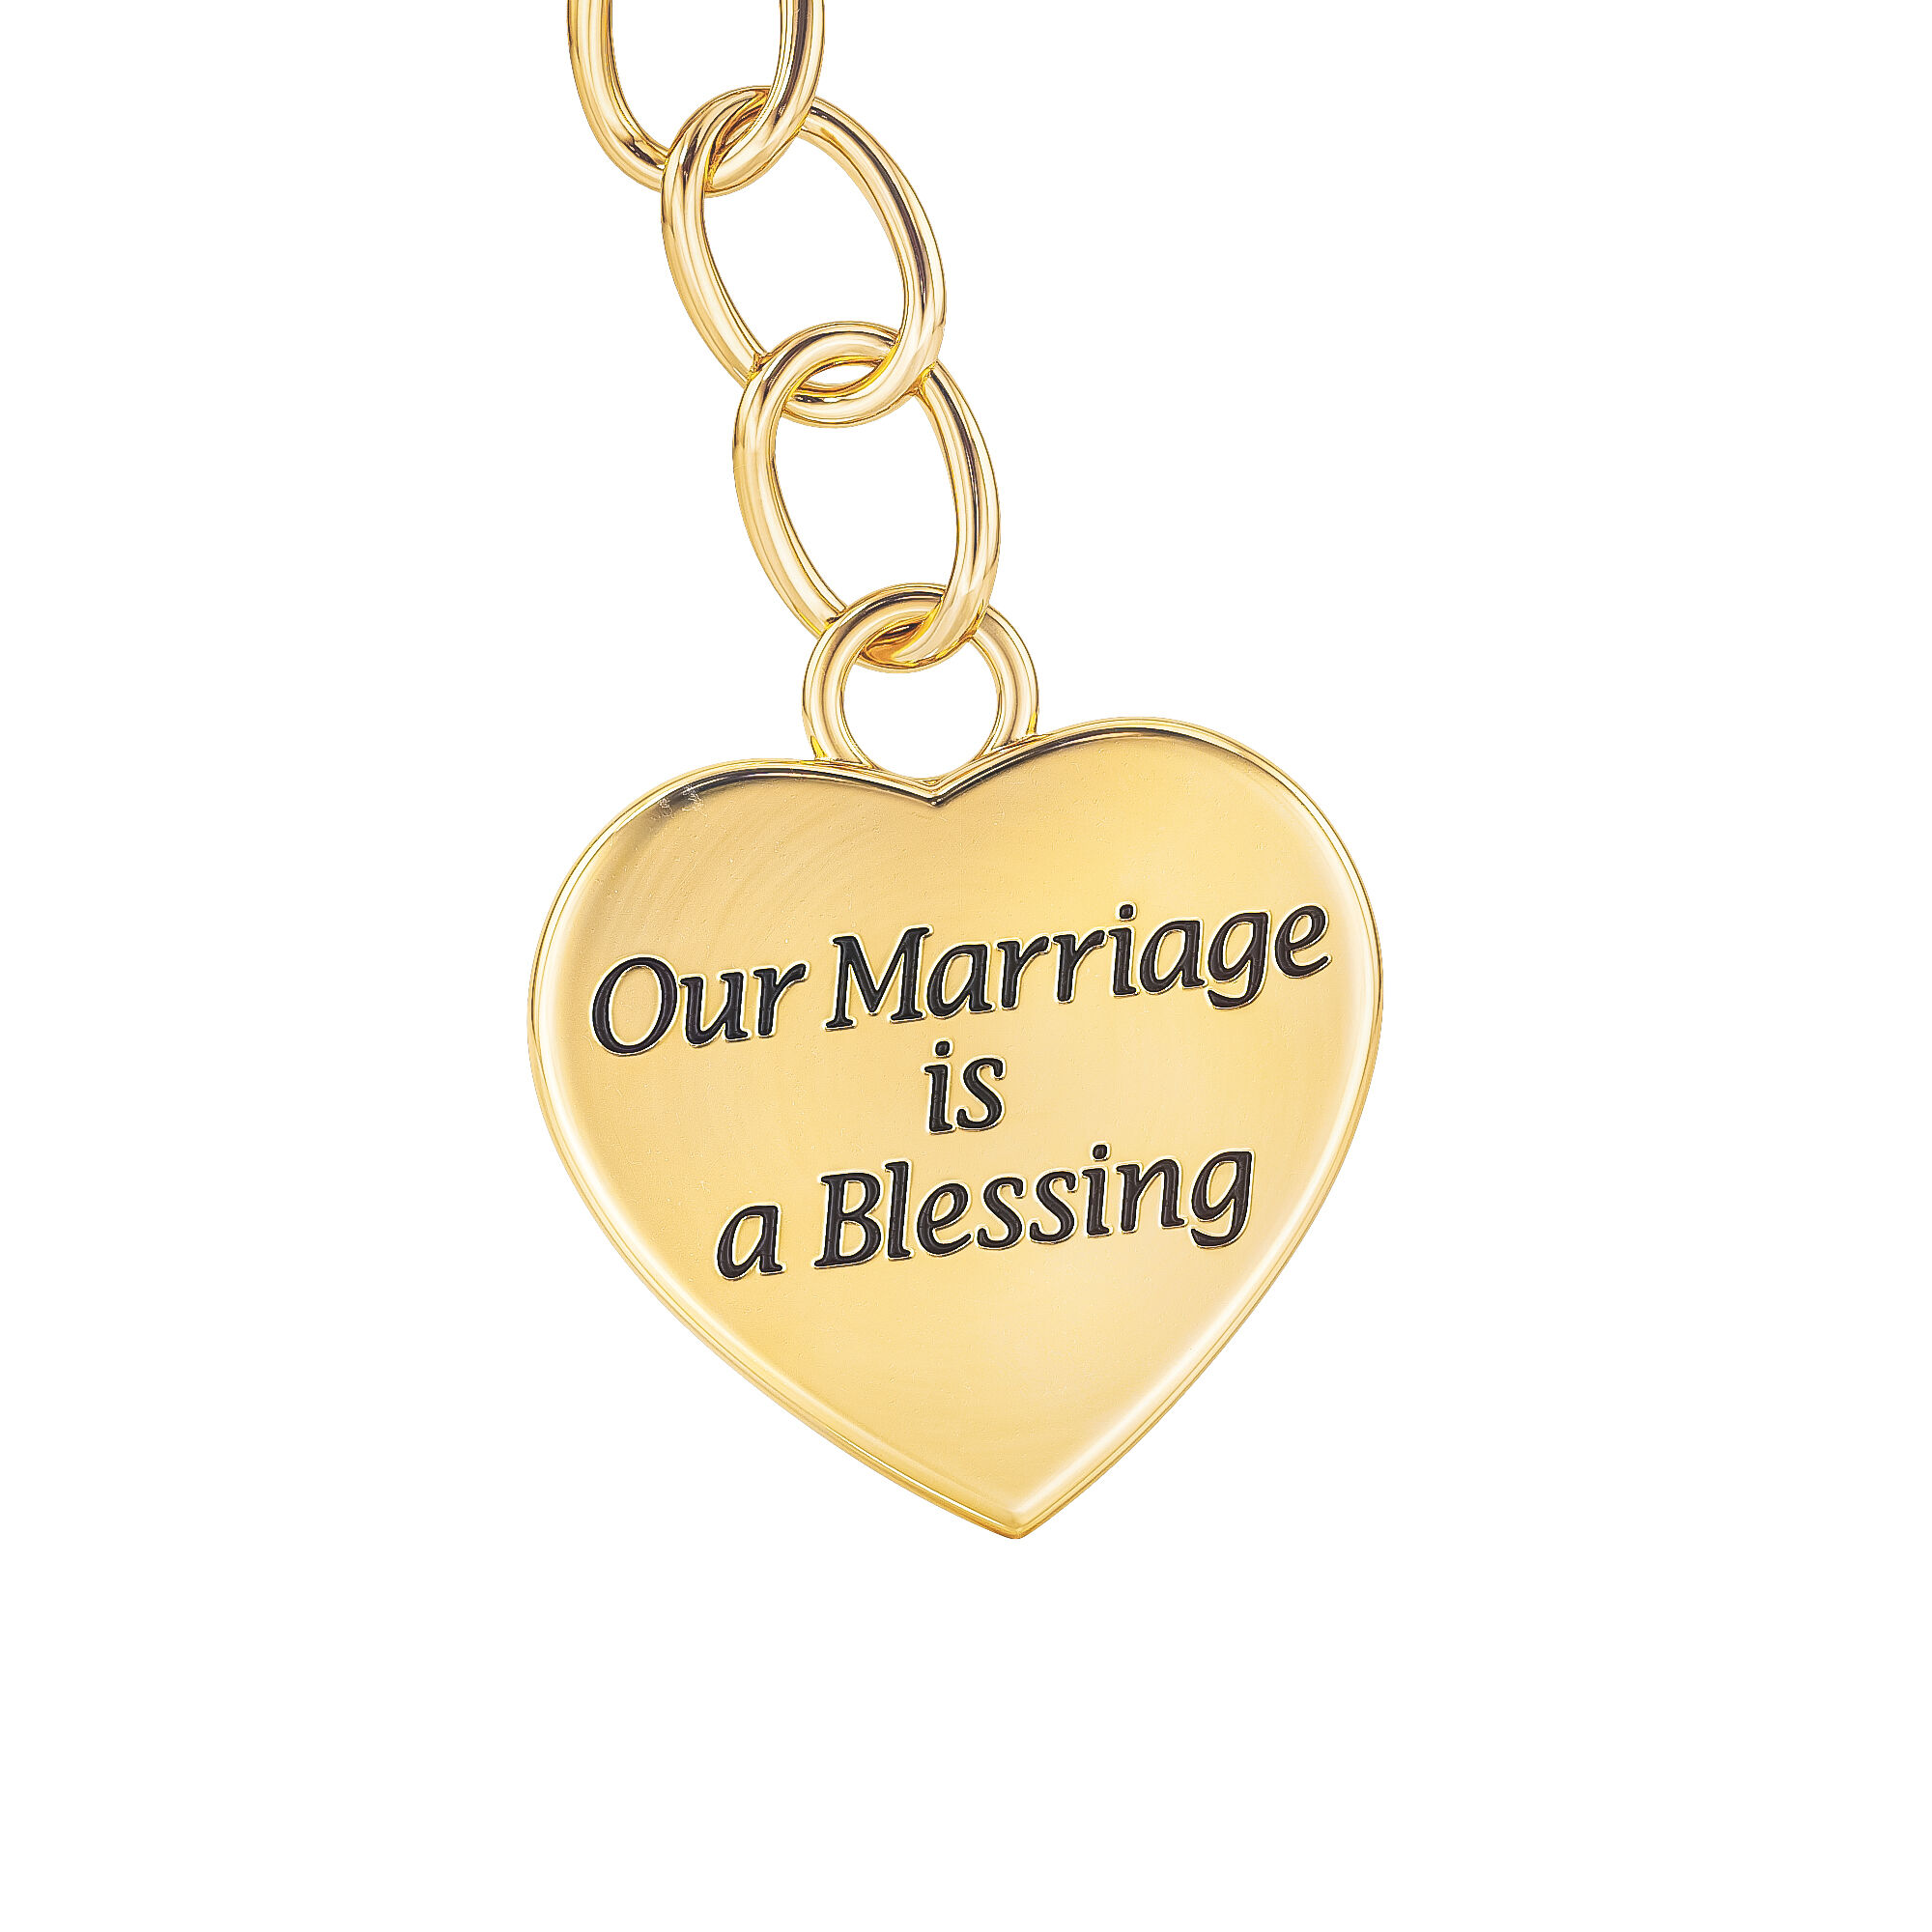 Our Marriage is a Blessing Anniversary Cross Pendant 11482 0012 d description